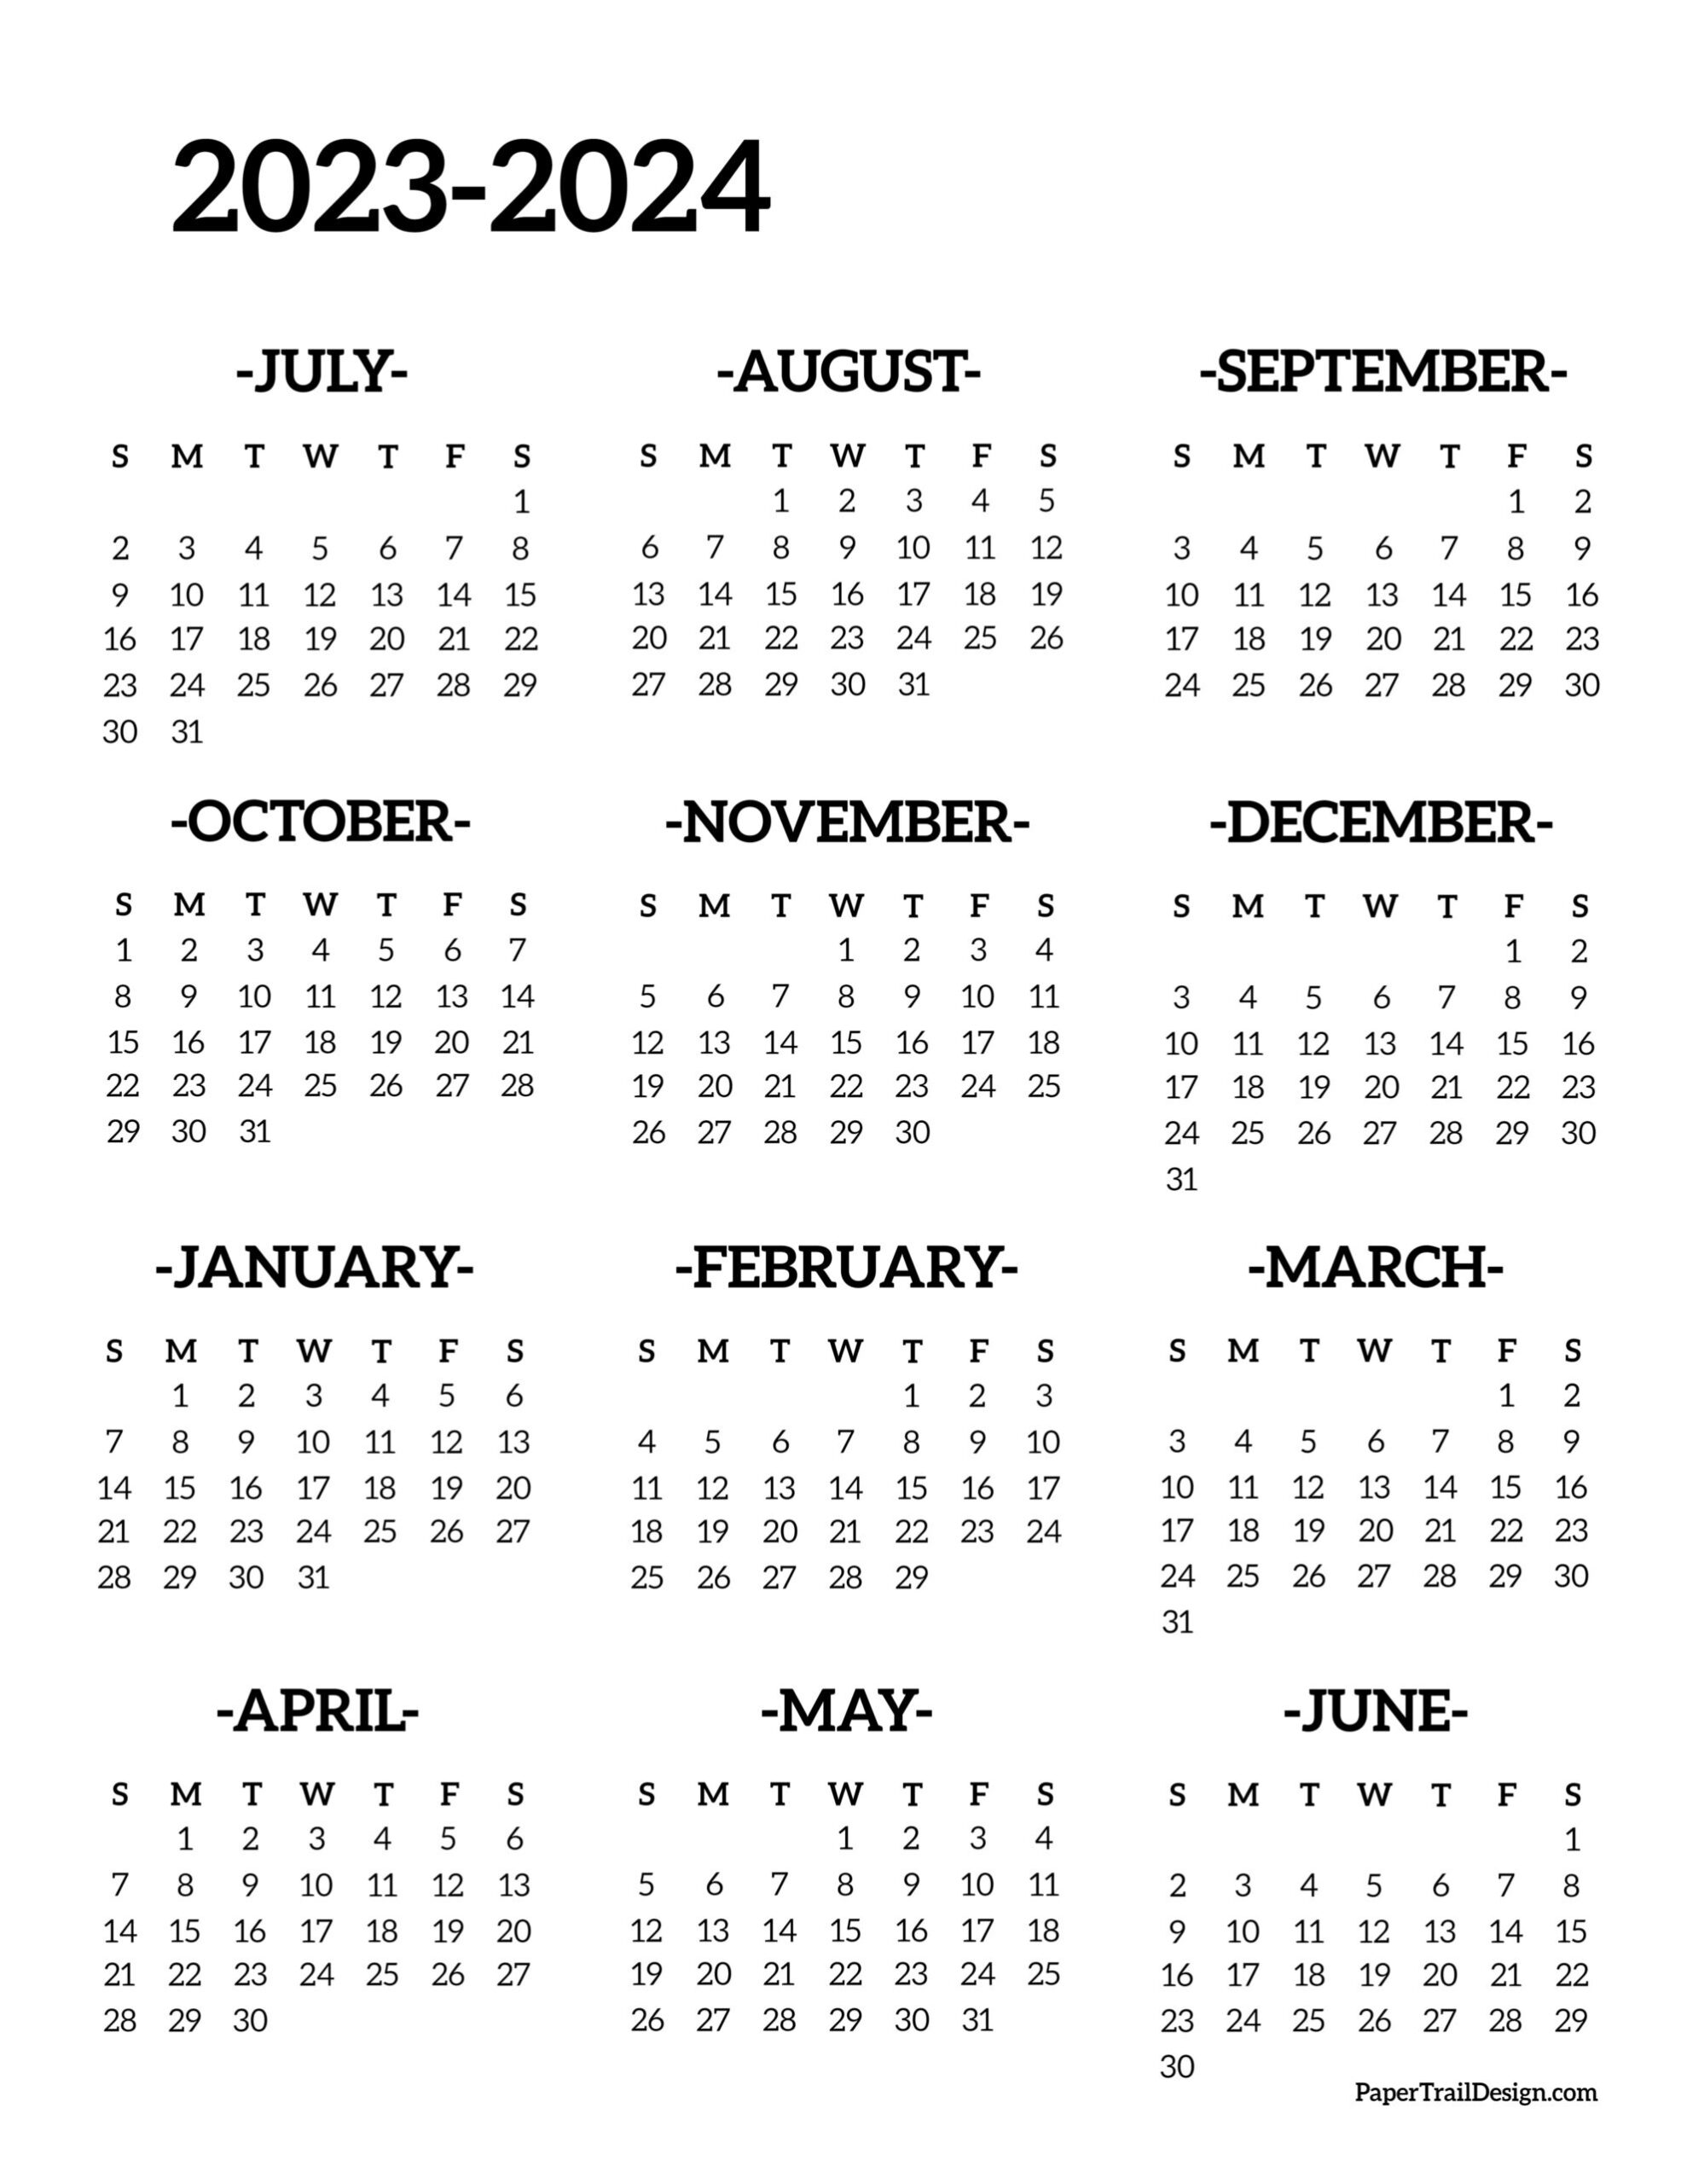 2023-2024 School Year Calendar Free Printable - Paper Trail Design regarding Free July 2023 To June 2024 Calendar